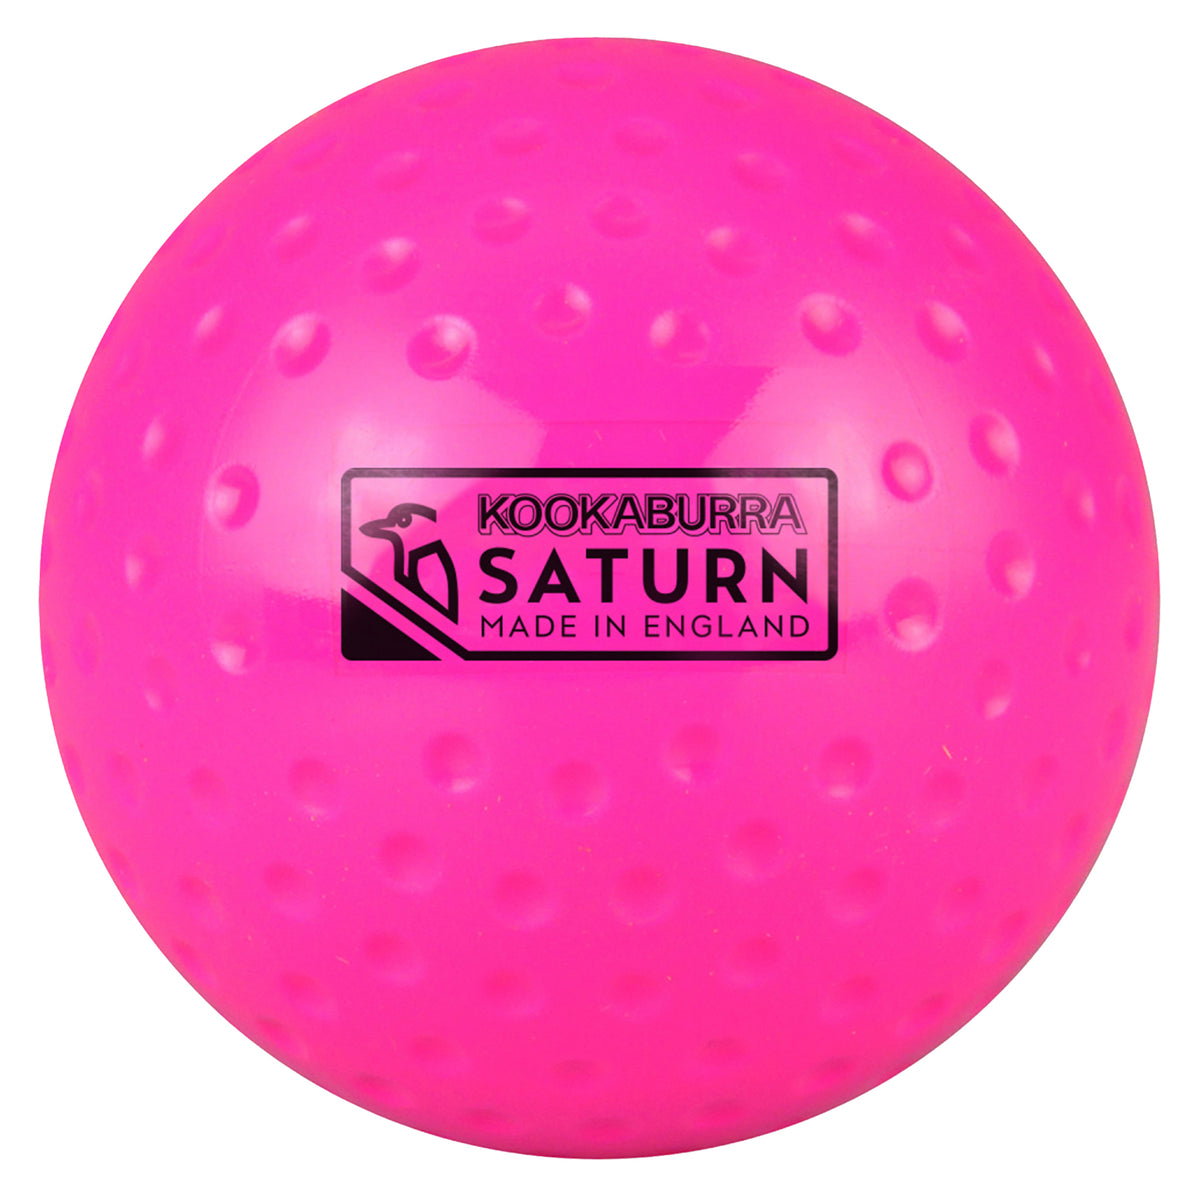 Kookaburra Saturn Dimple Hockey Ball: Pink